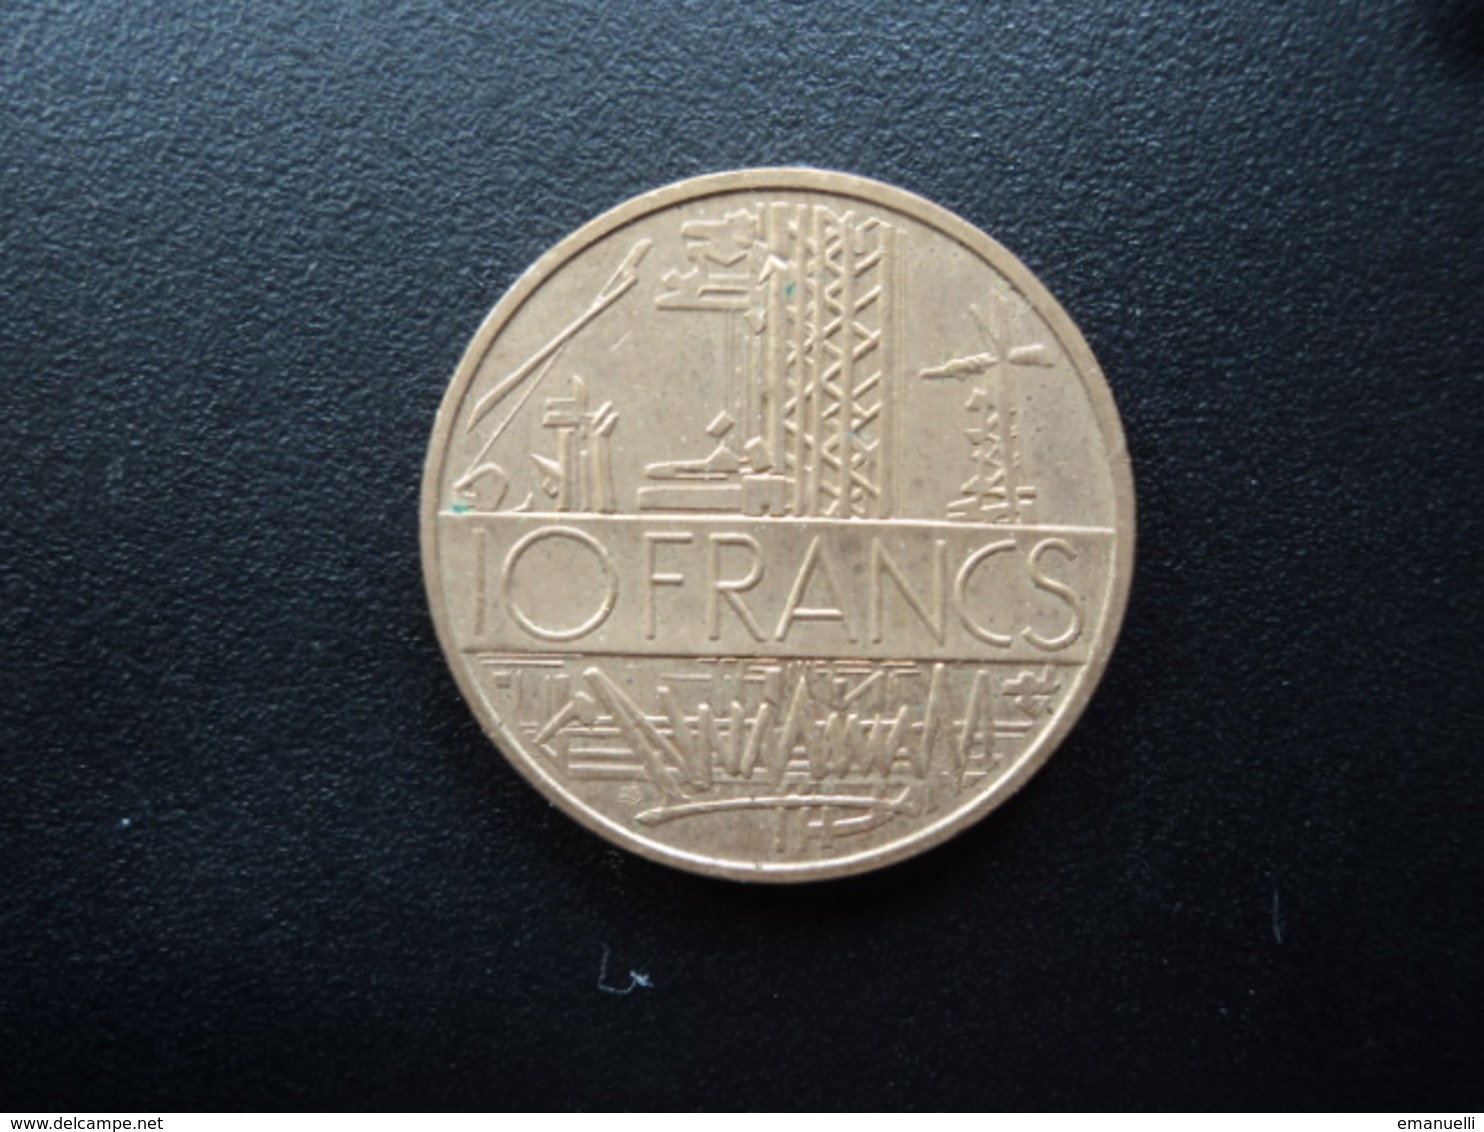 FRANCE : 10 FRANCS  1976  Tranche B *  F.365 / G.814 / KM 940   SUP+ - 10 Francs